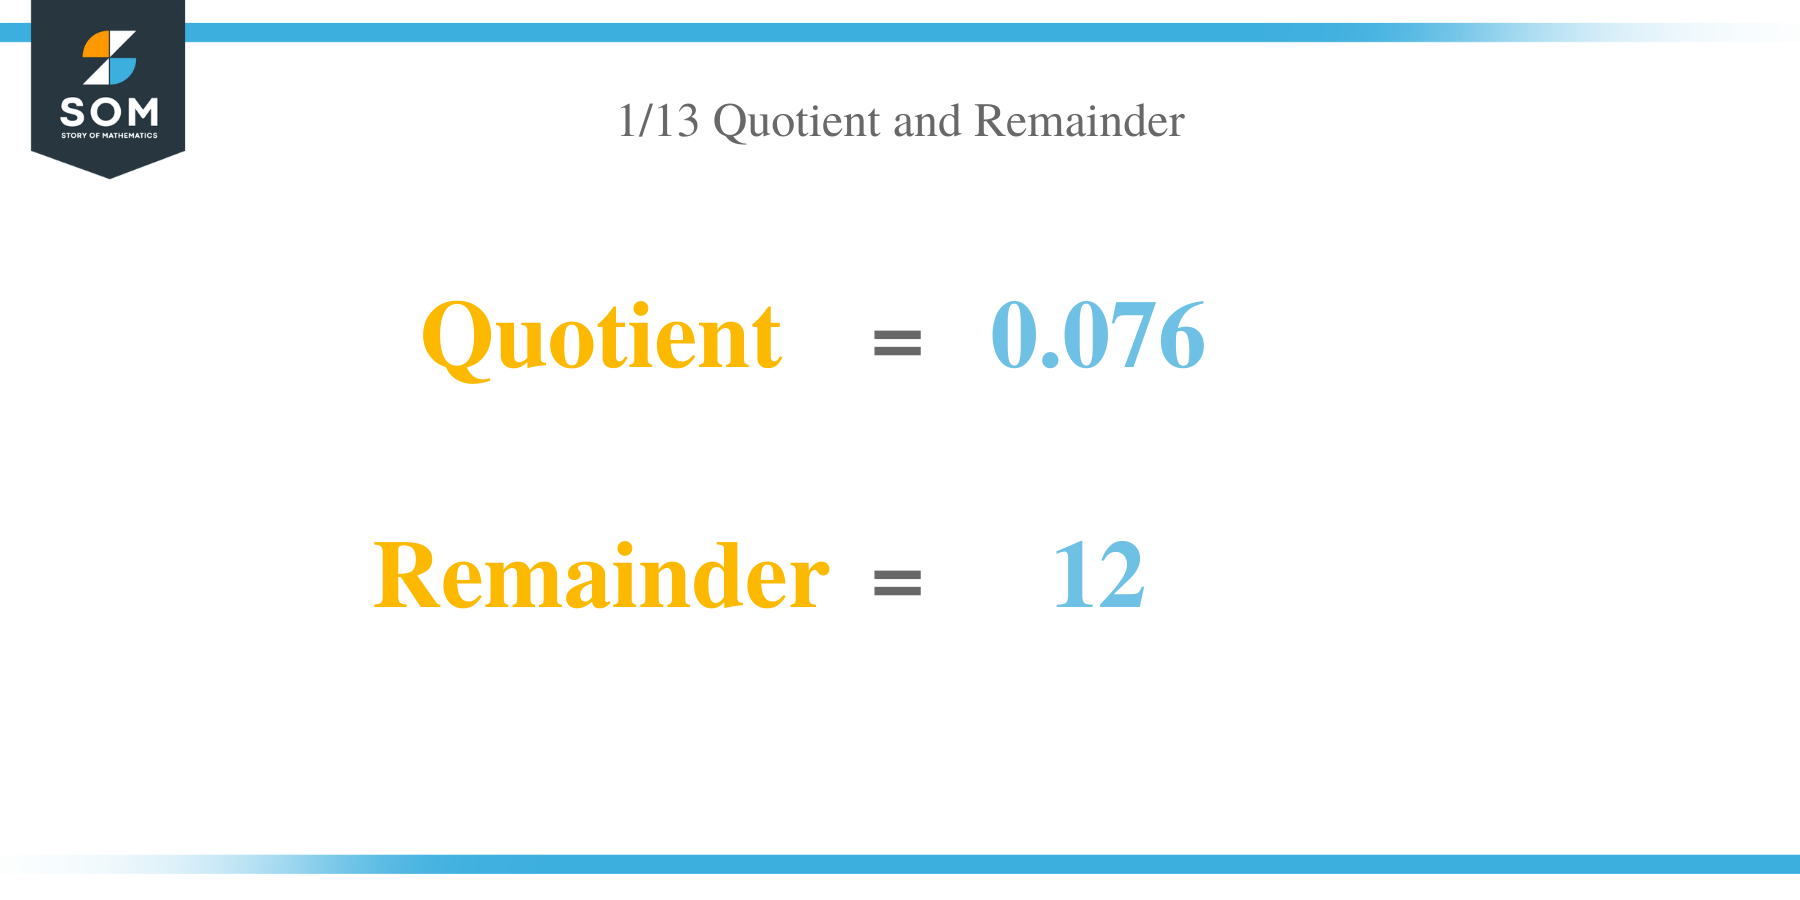 Quotient and Remainder of 1 per 13